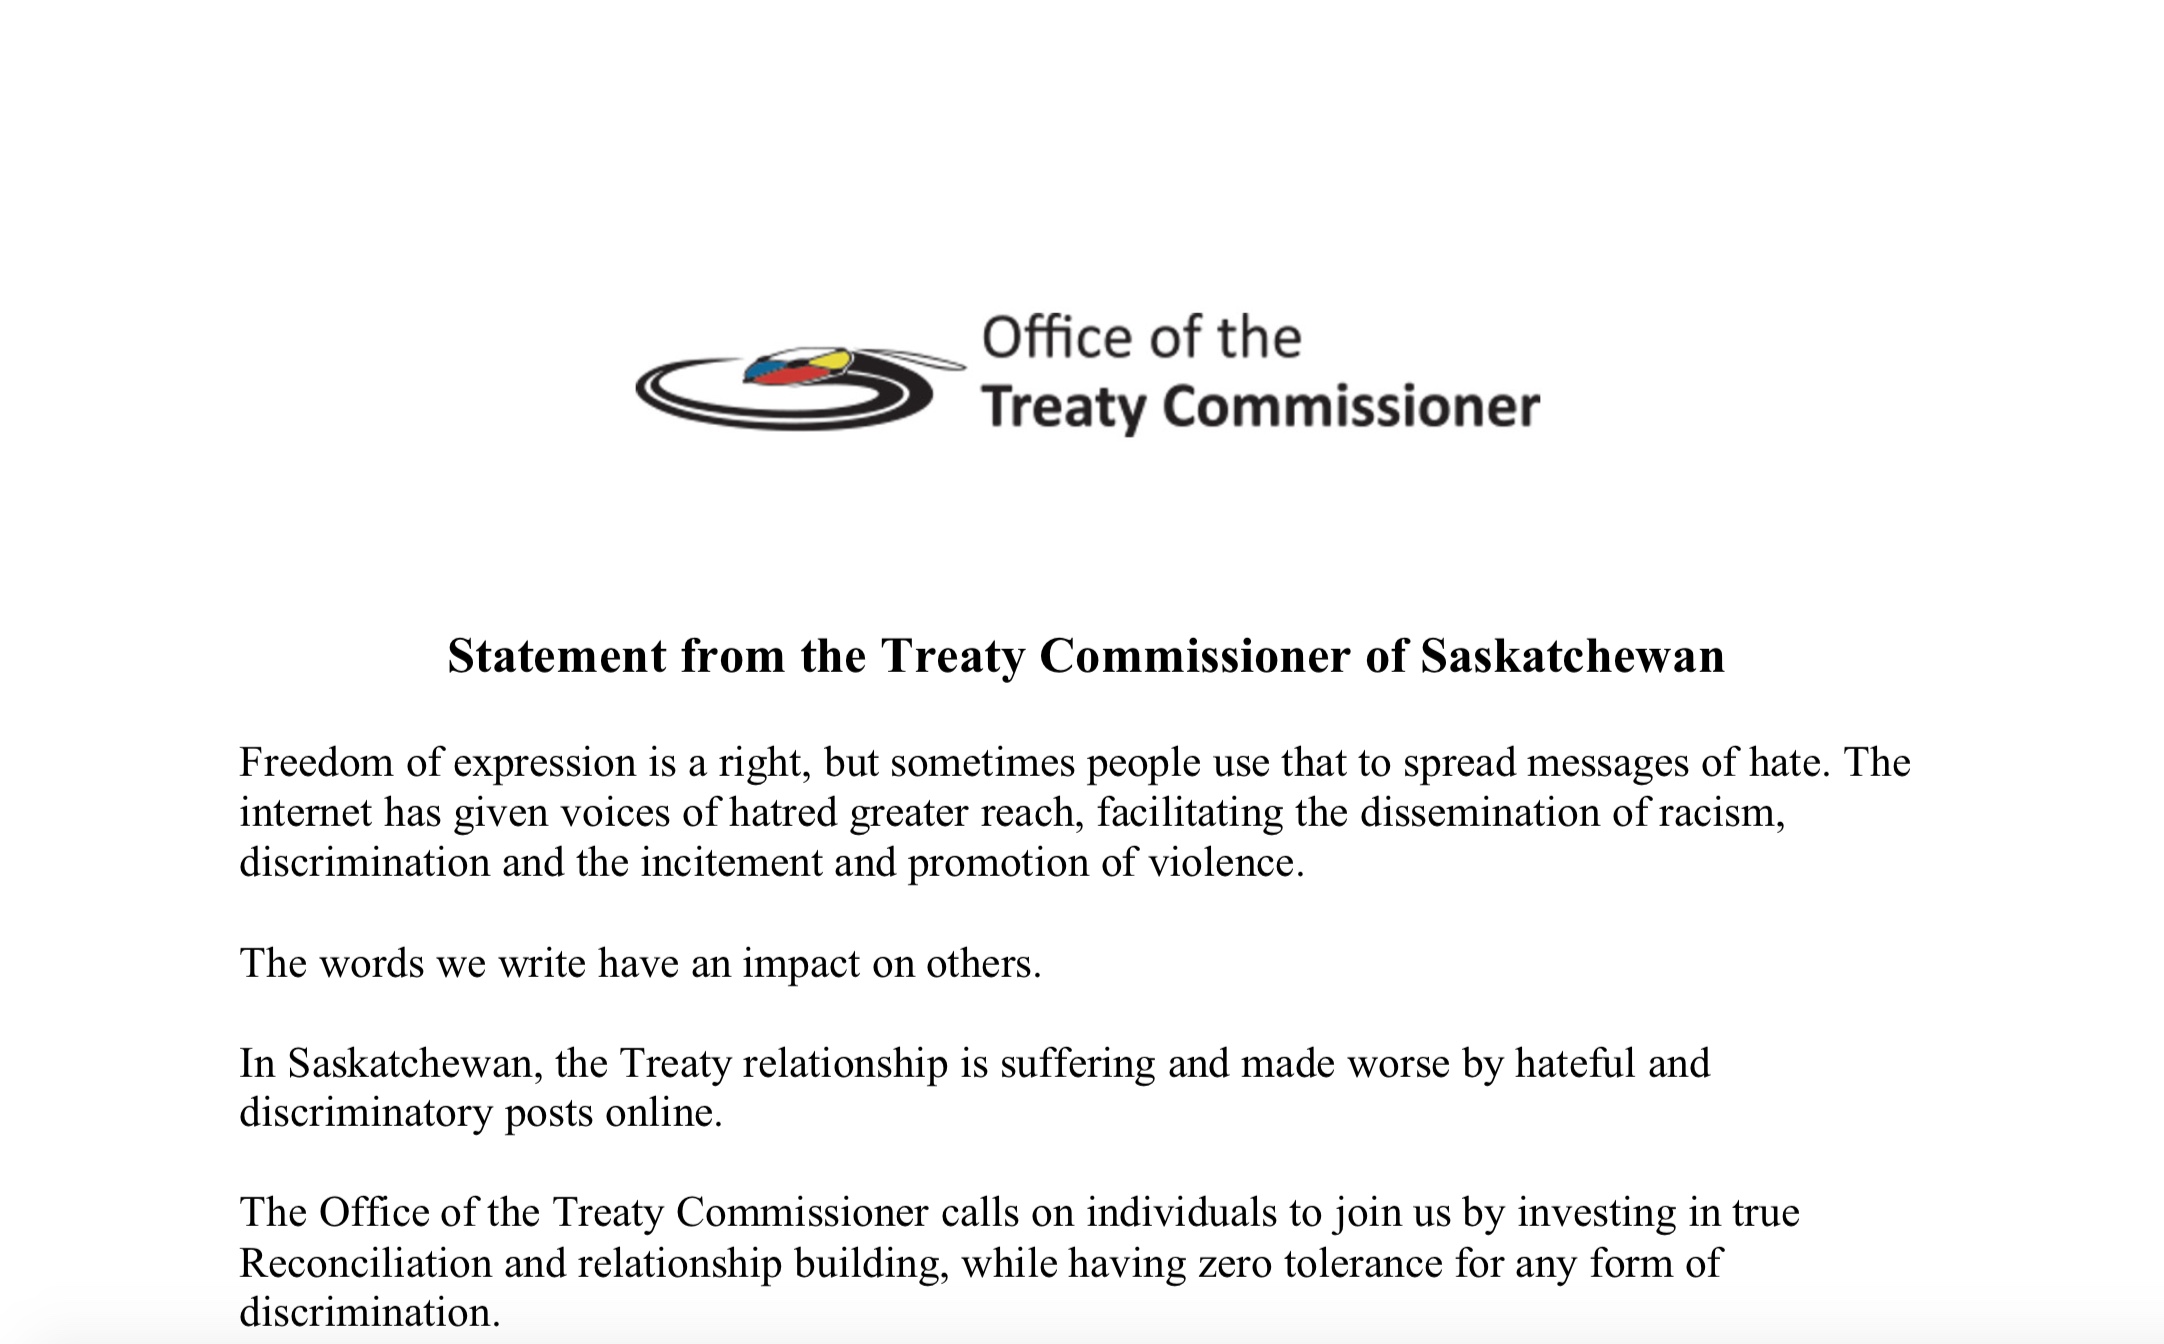 Treaty Commissioner Statement on Hate Speech Online